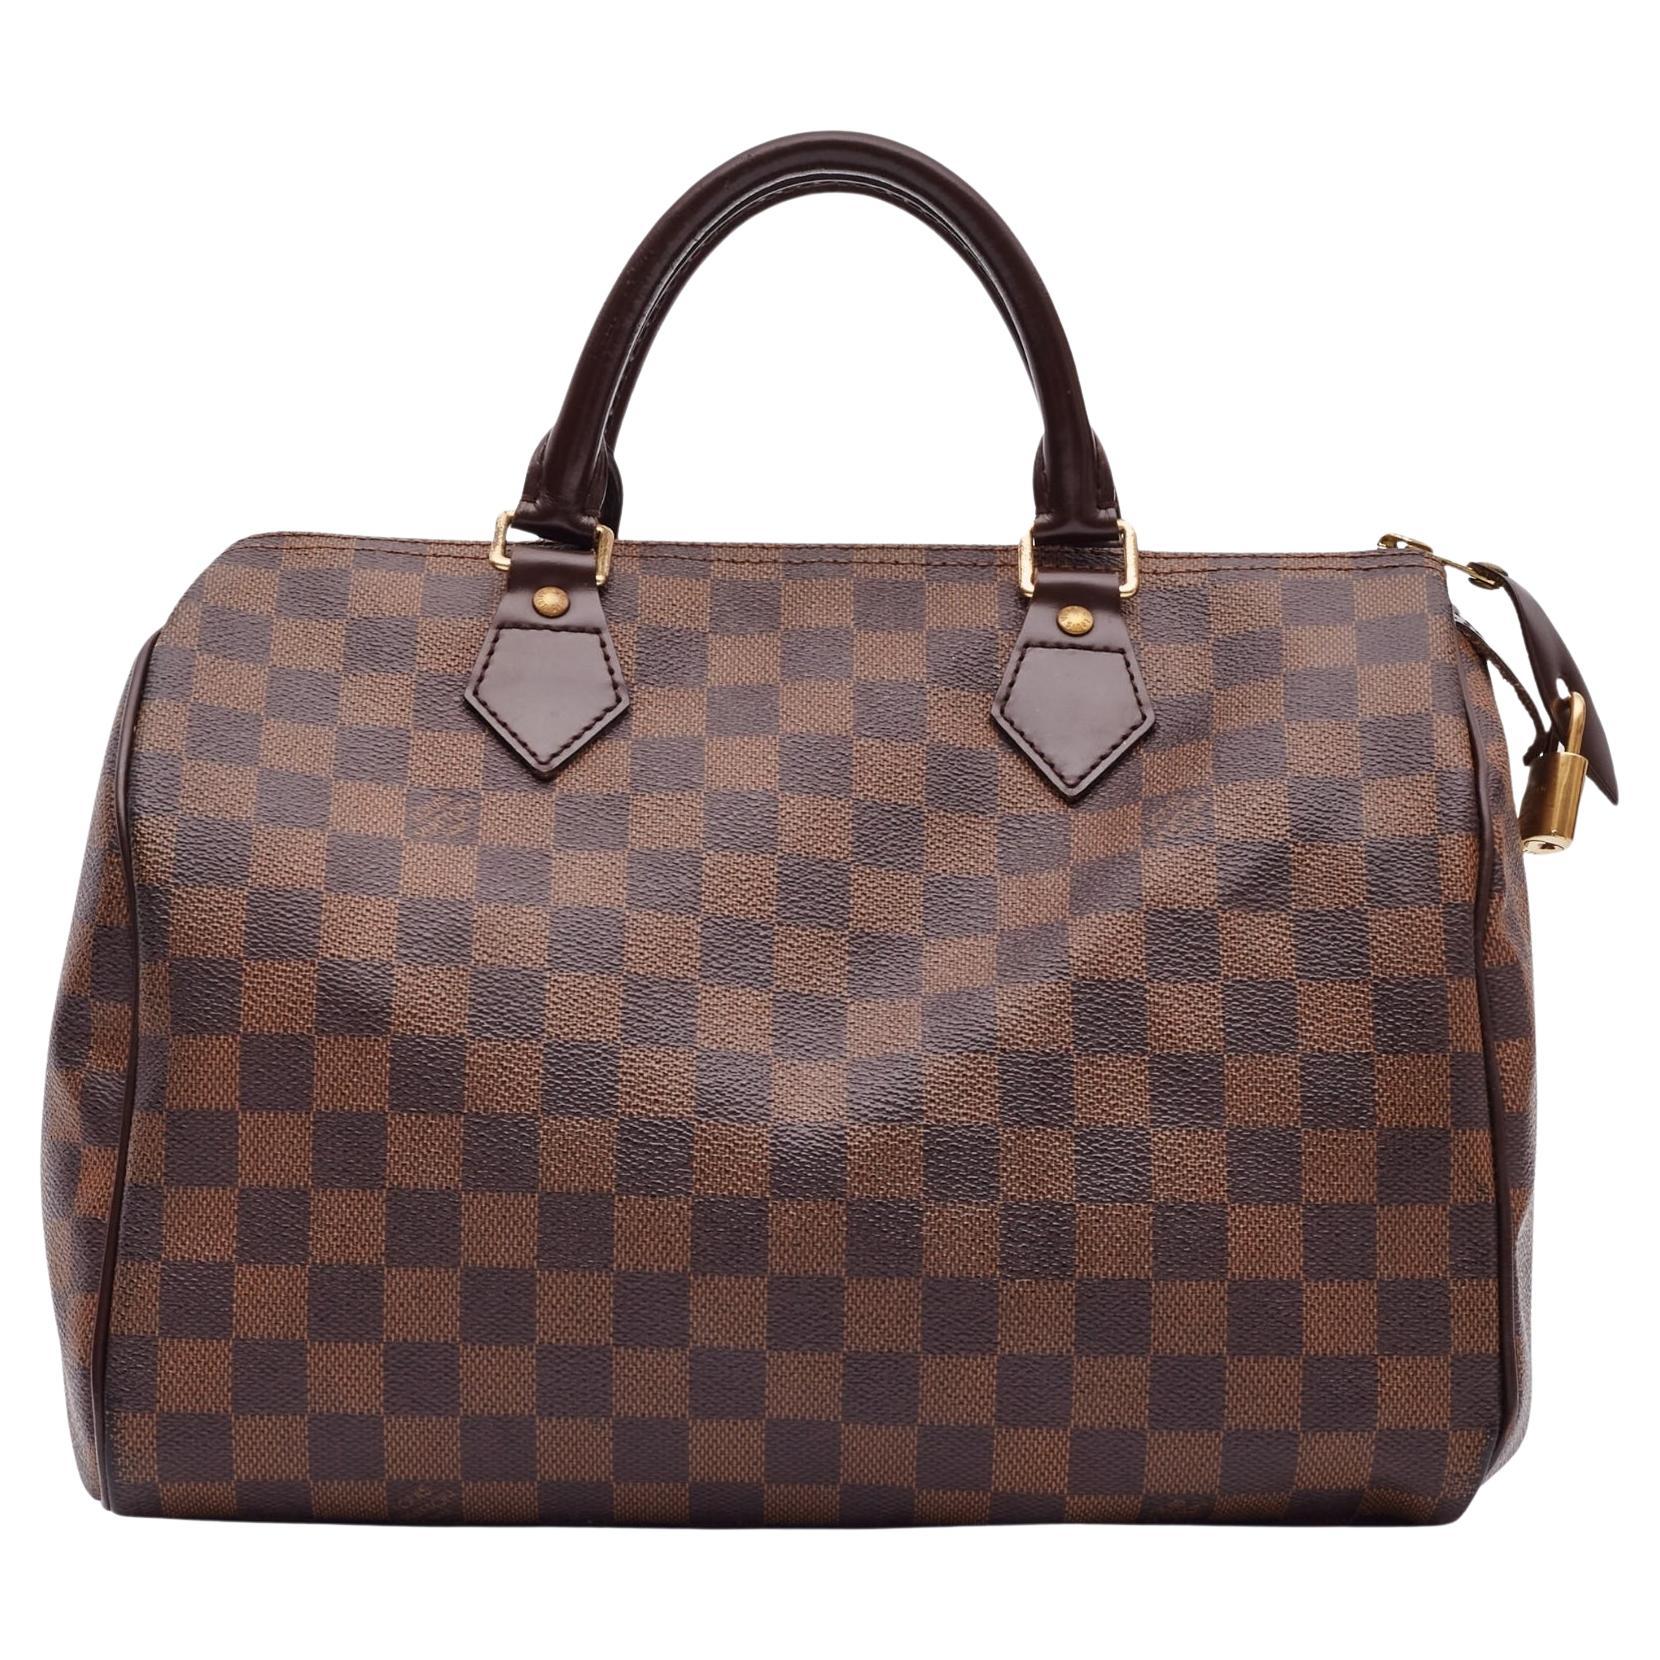 Louis Vuitton Damier Ebene Speedy 30 Handbag With Strap For Sale